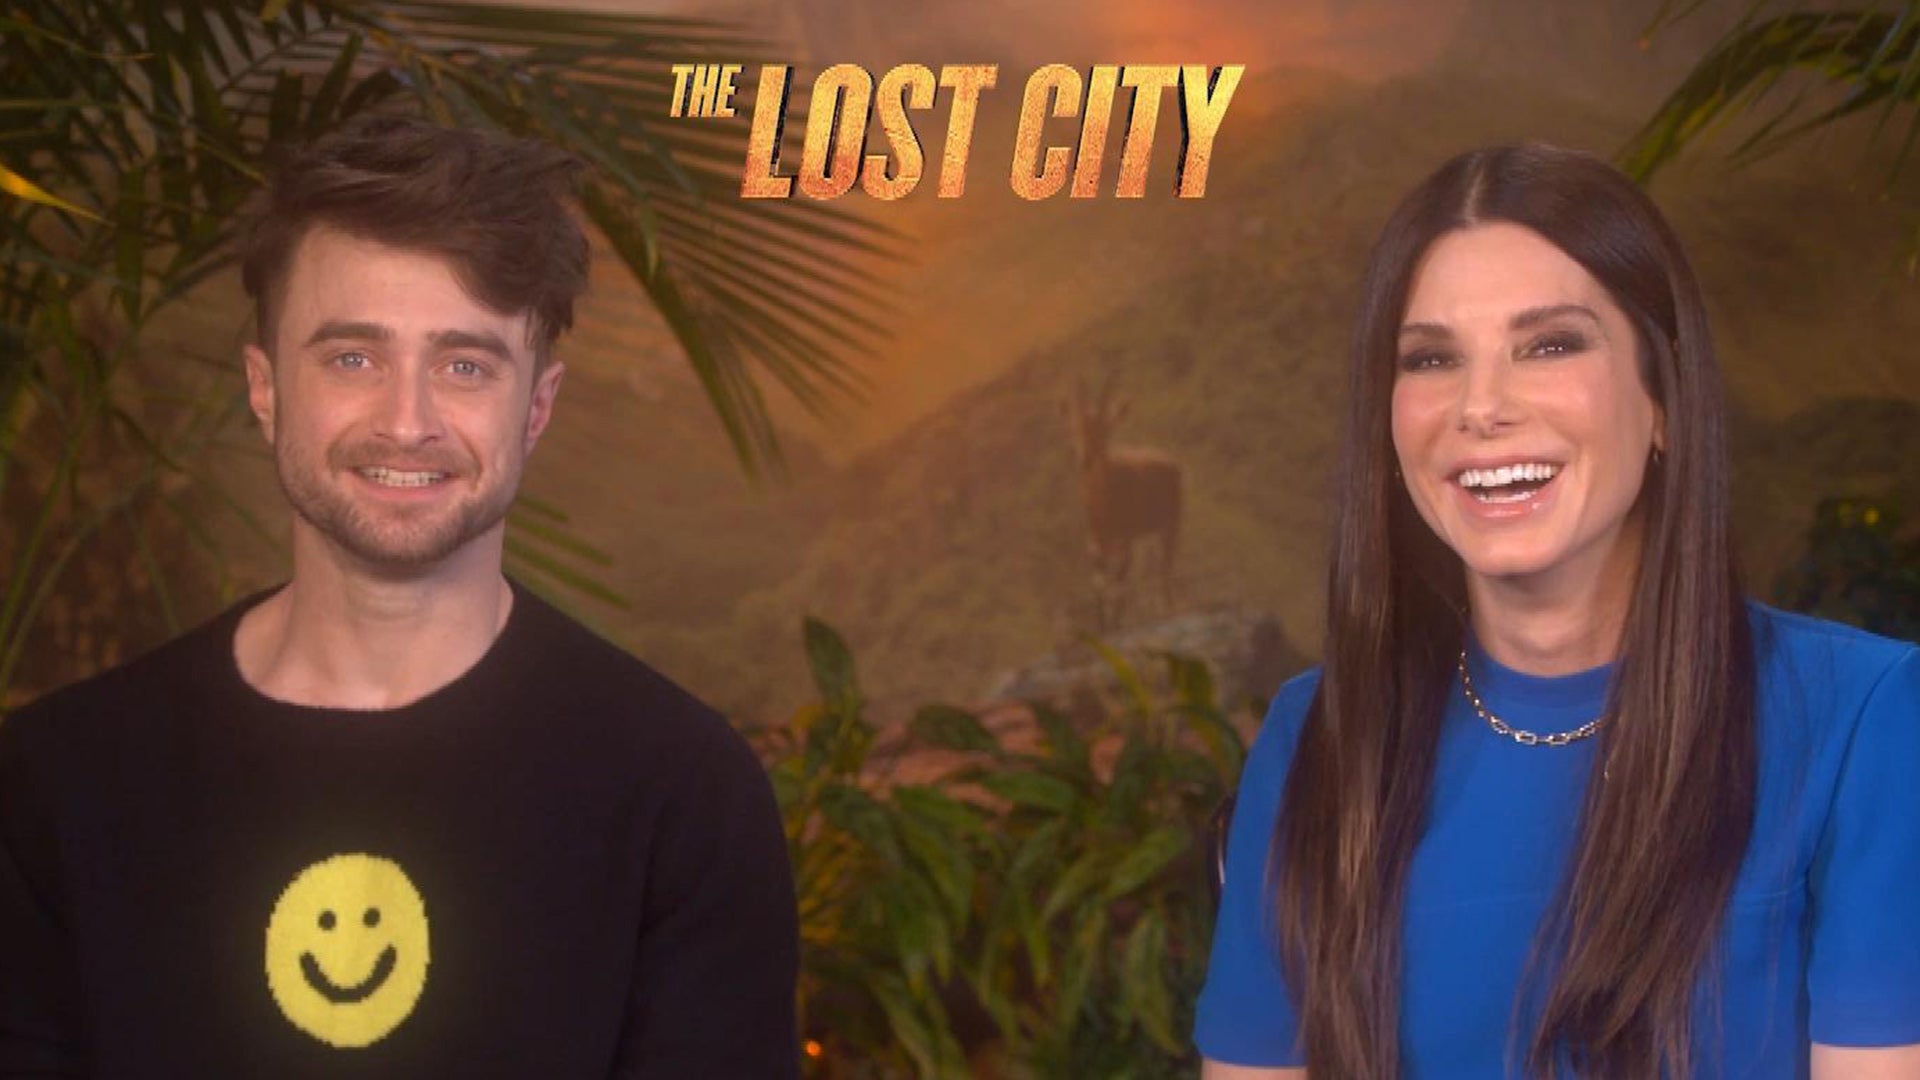 The Lost City - Official Trailer, Sandra Bullock, Channing Tatum